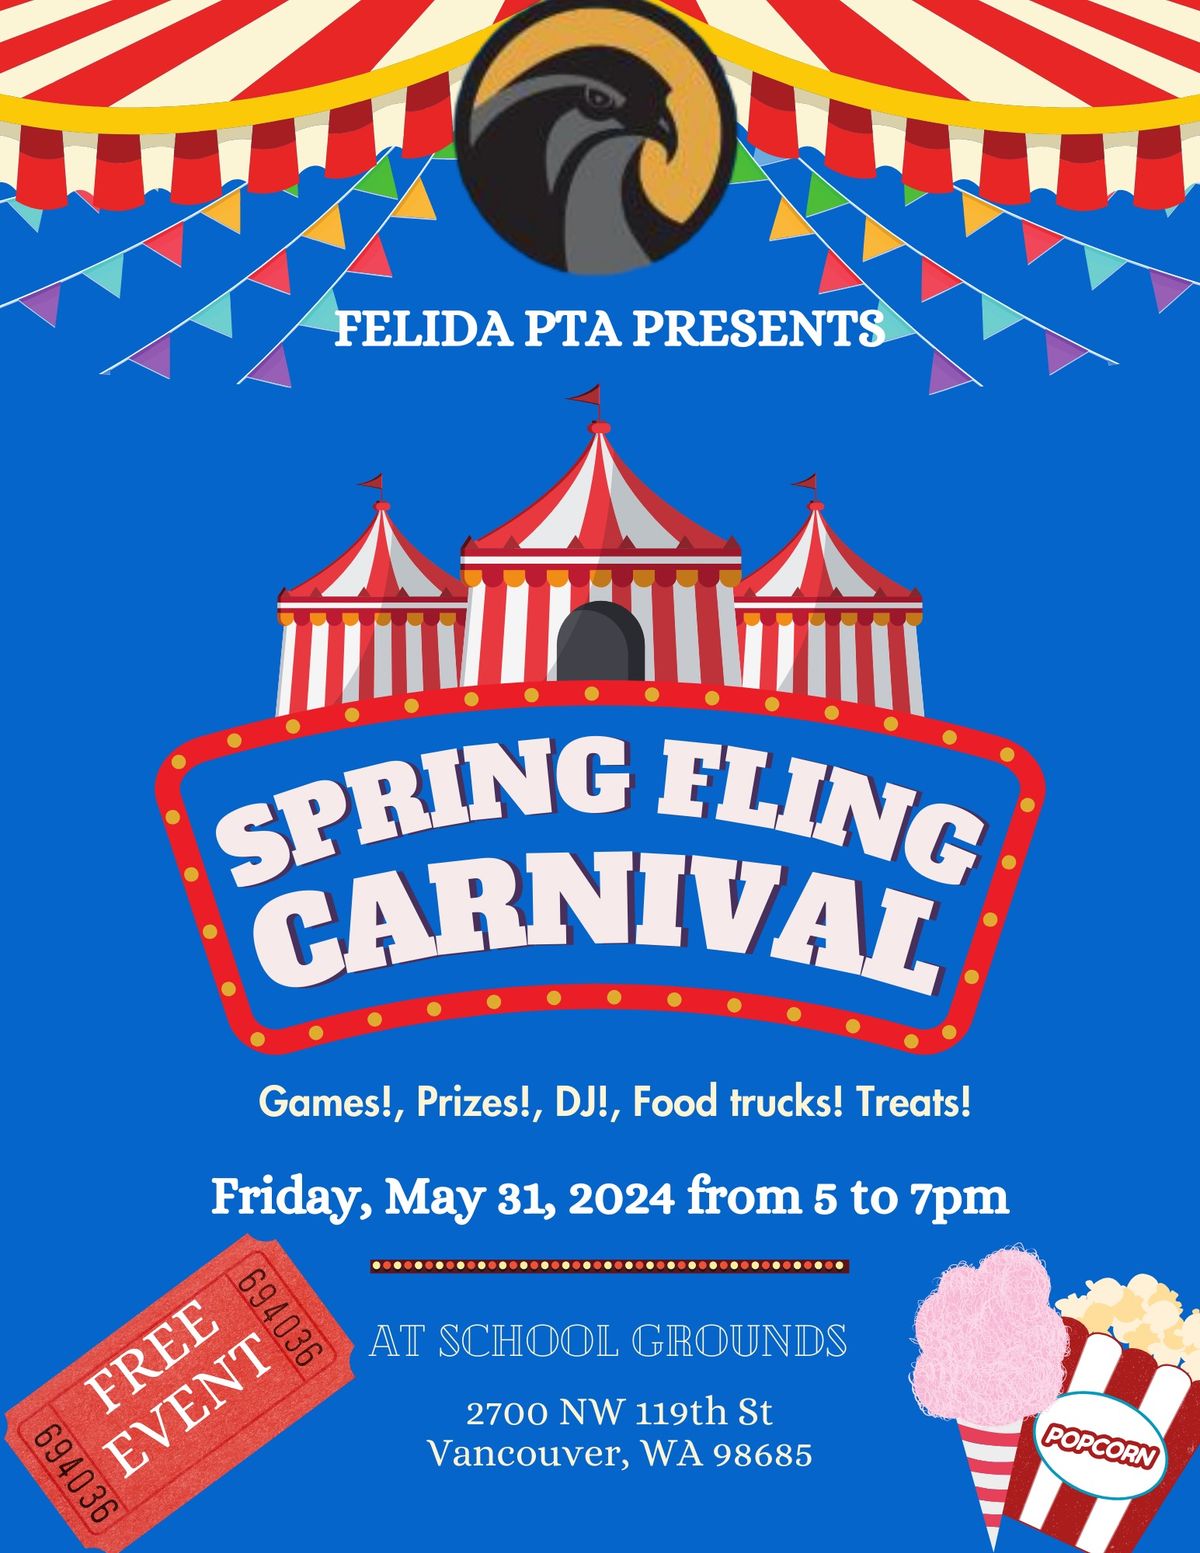 Felida PTA Annual Spring Fling Carnival